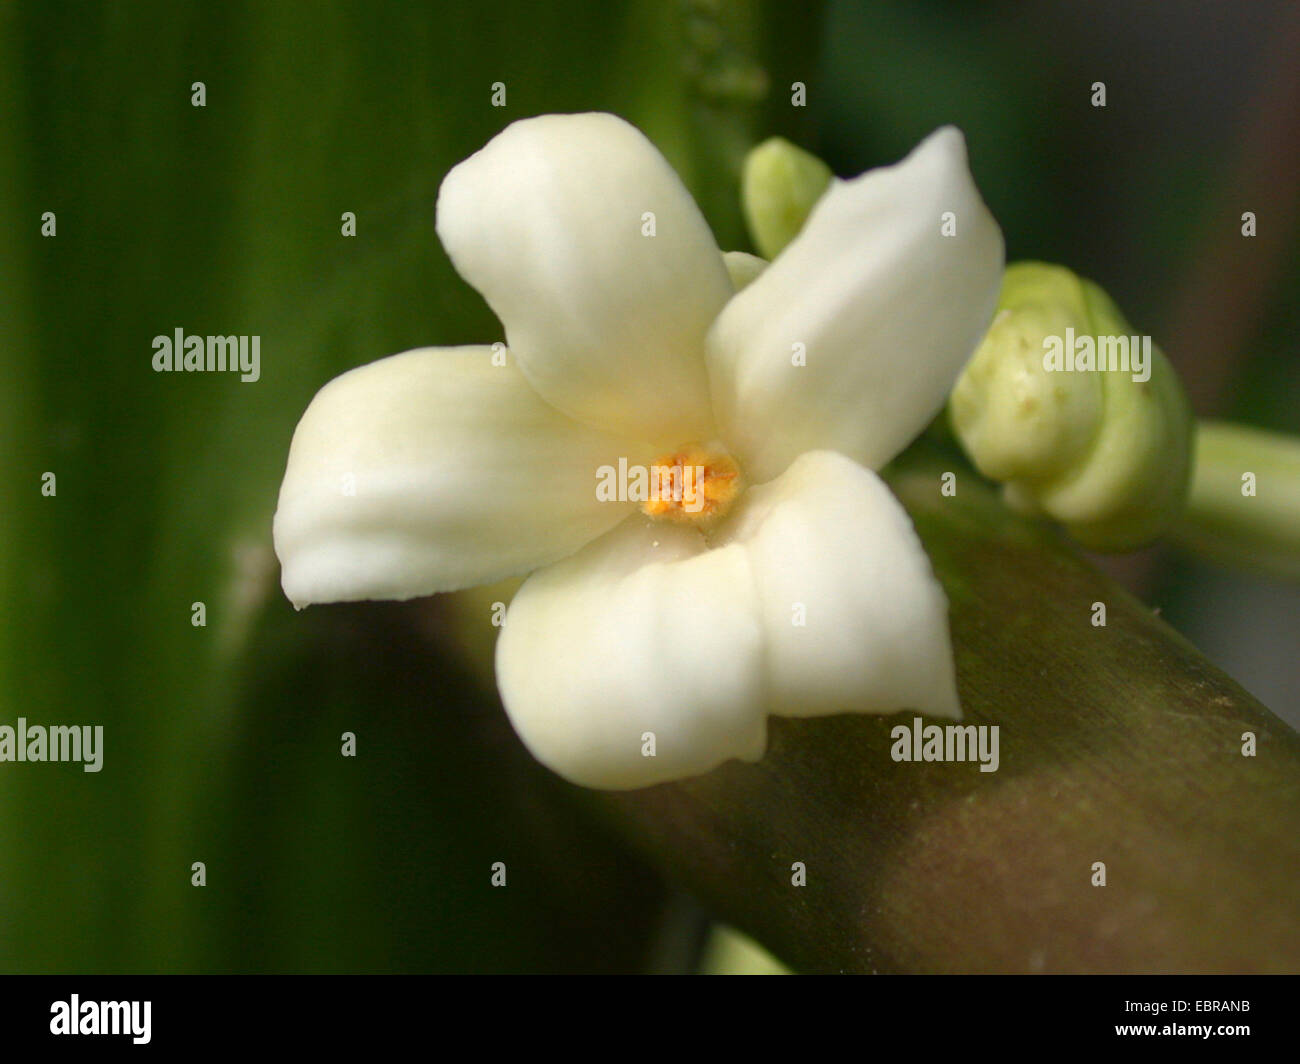 papaya, papaw, paw paw, mamao, tree melon (Carica papaya), male flower Stock Photo